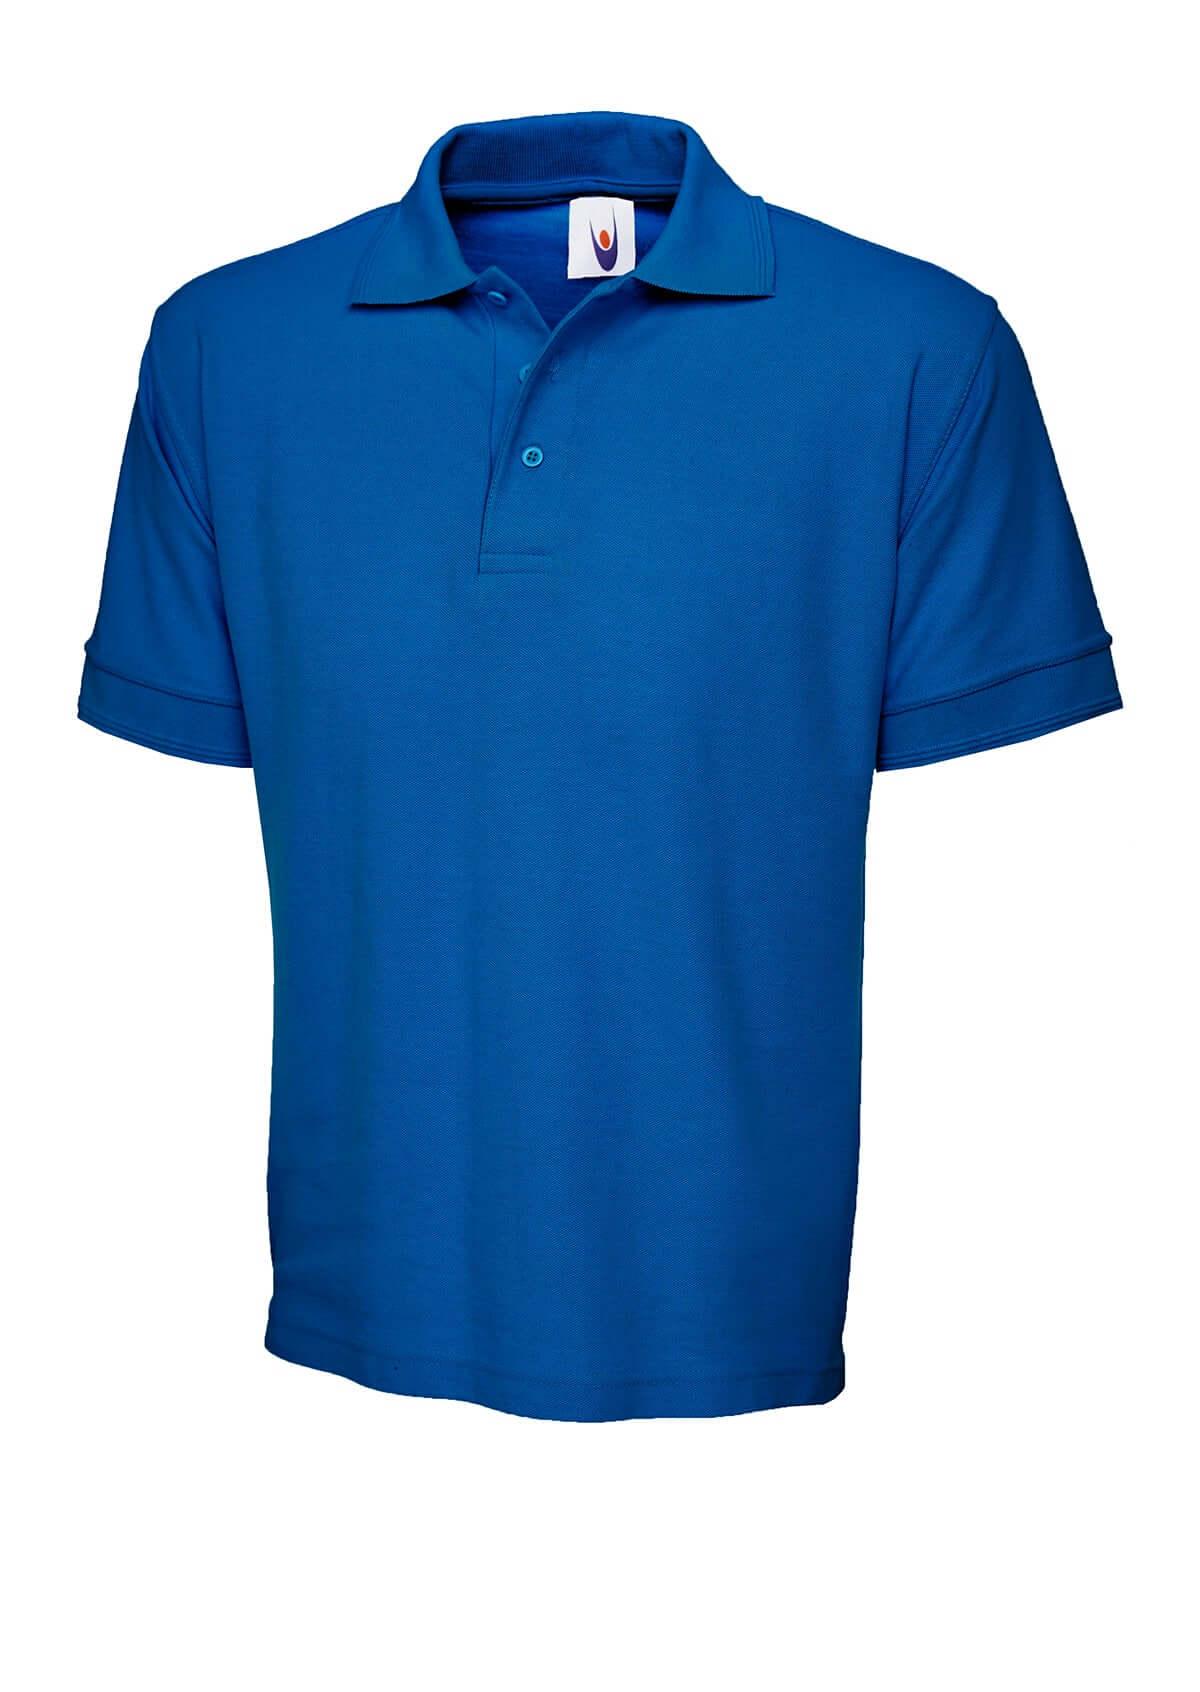 Pegasus Uniform Premium Unisex Polo Shirt - Royal Blue